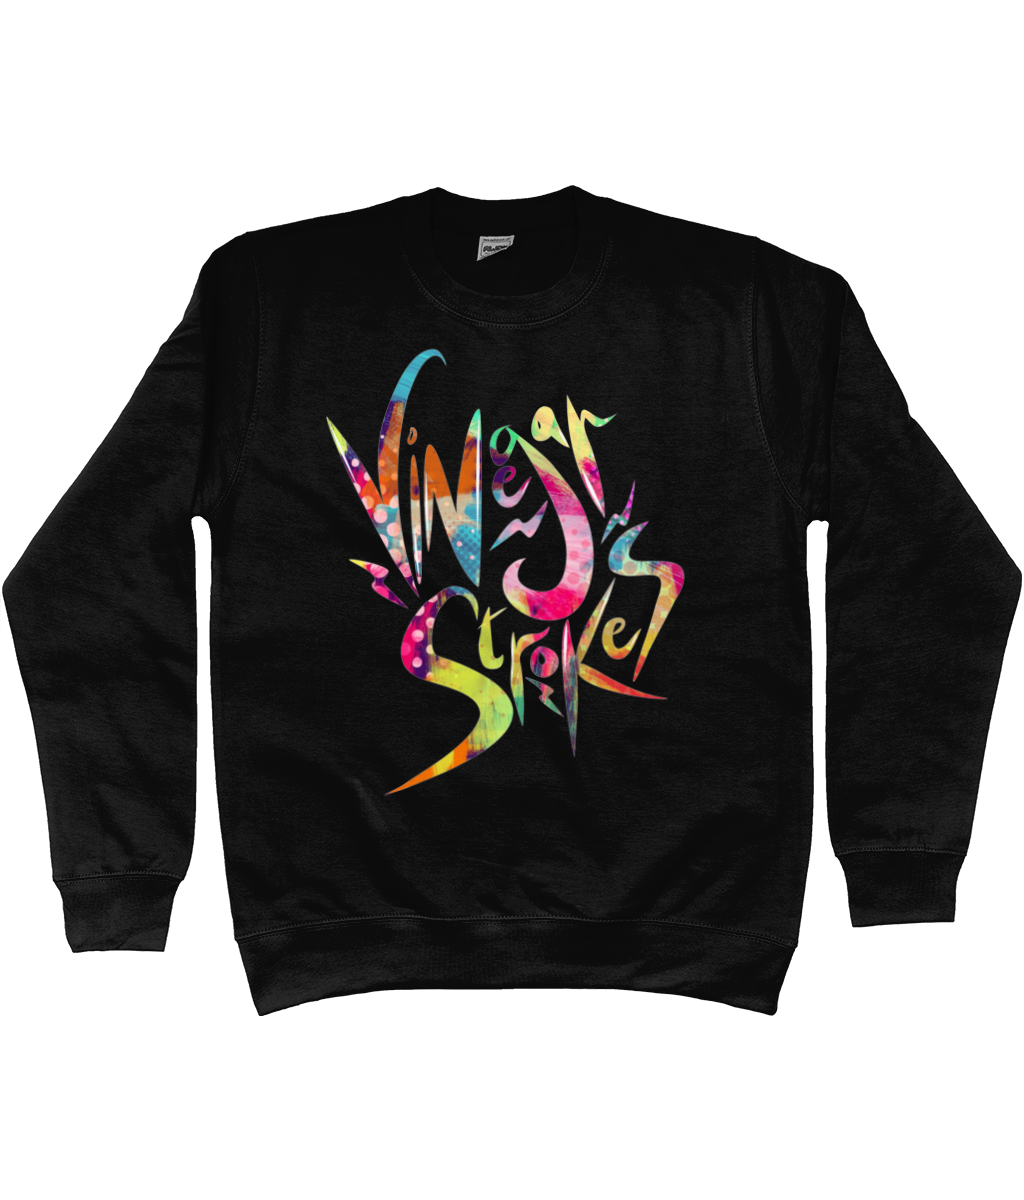 Vinegar Strokes Logo Sweatshirt - Official Merchandise